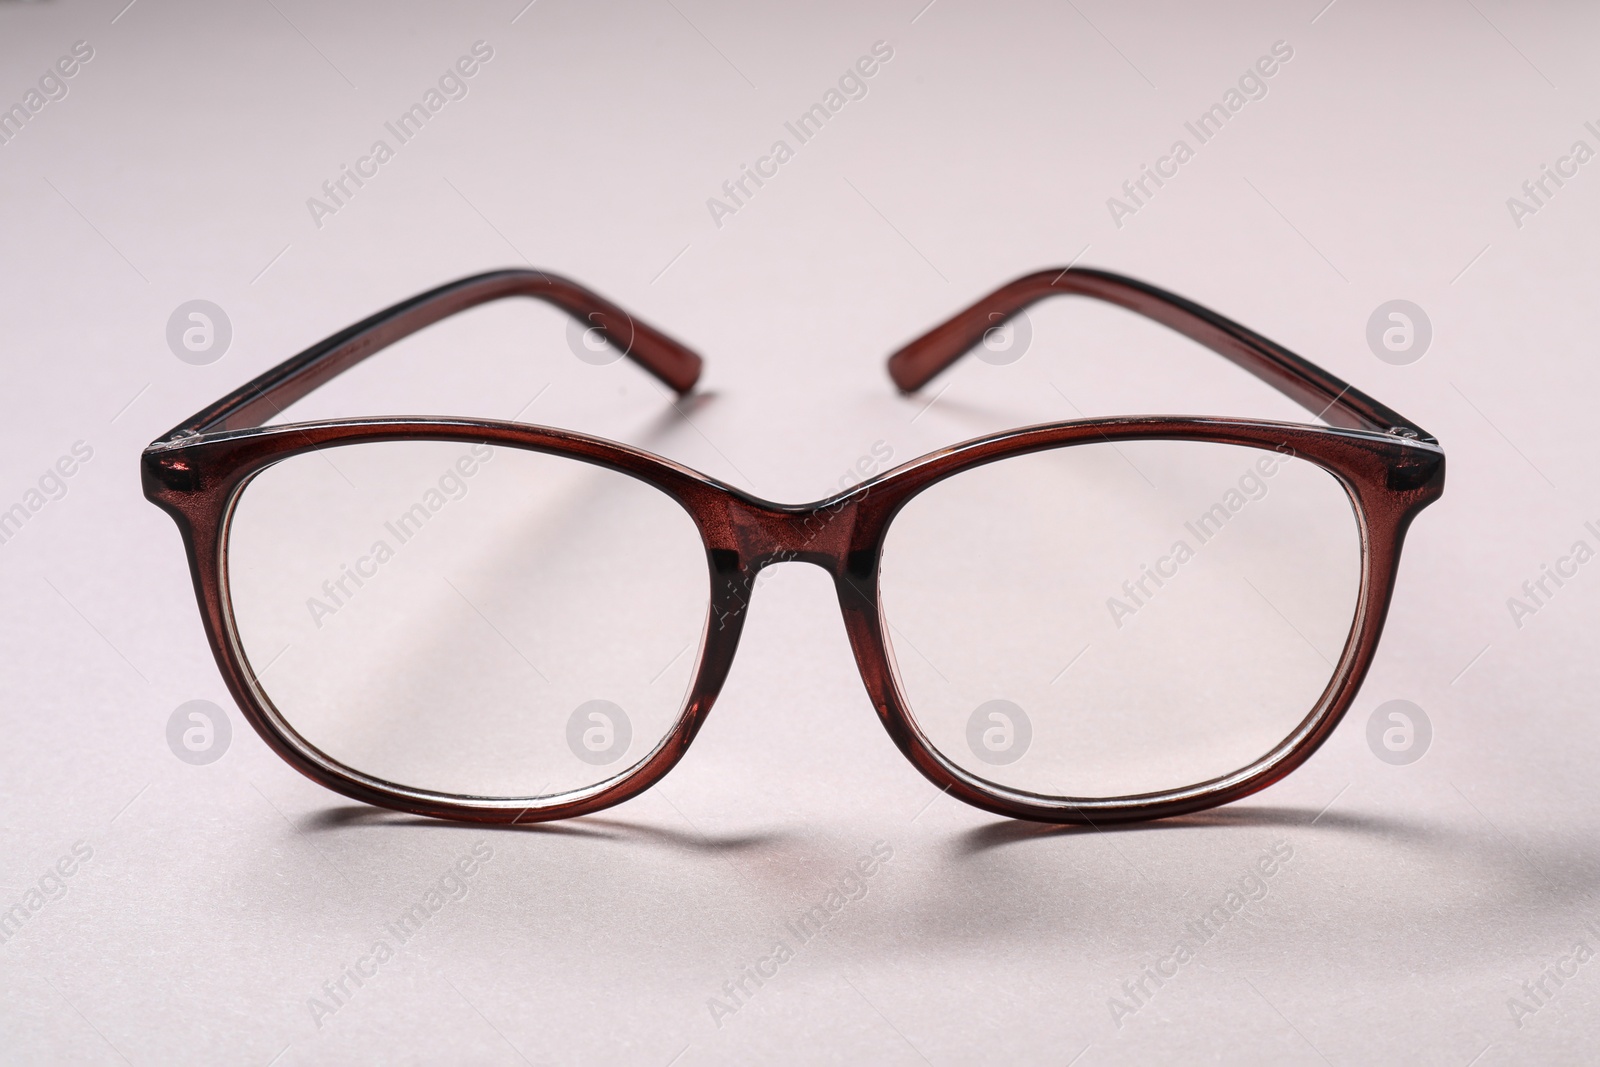 Photo of Stylish pair of glasses on light background, closeup